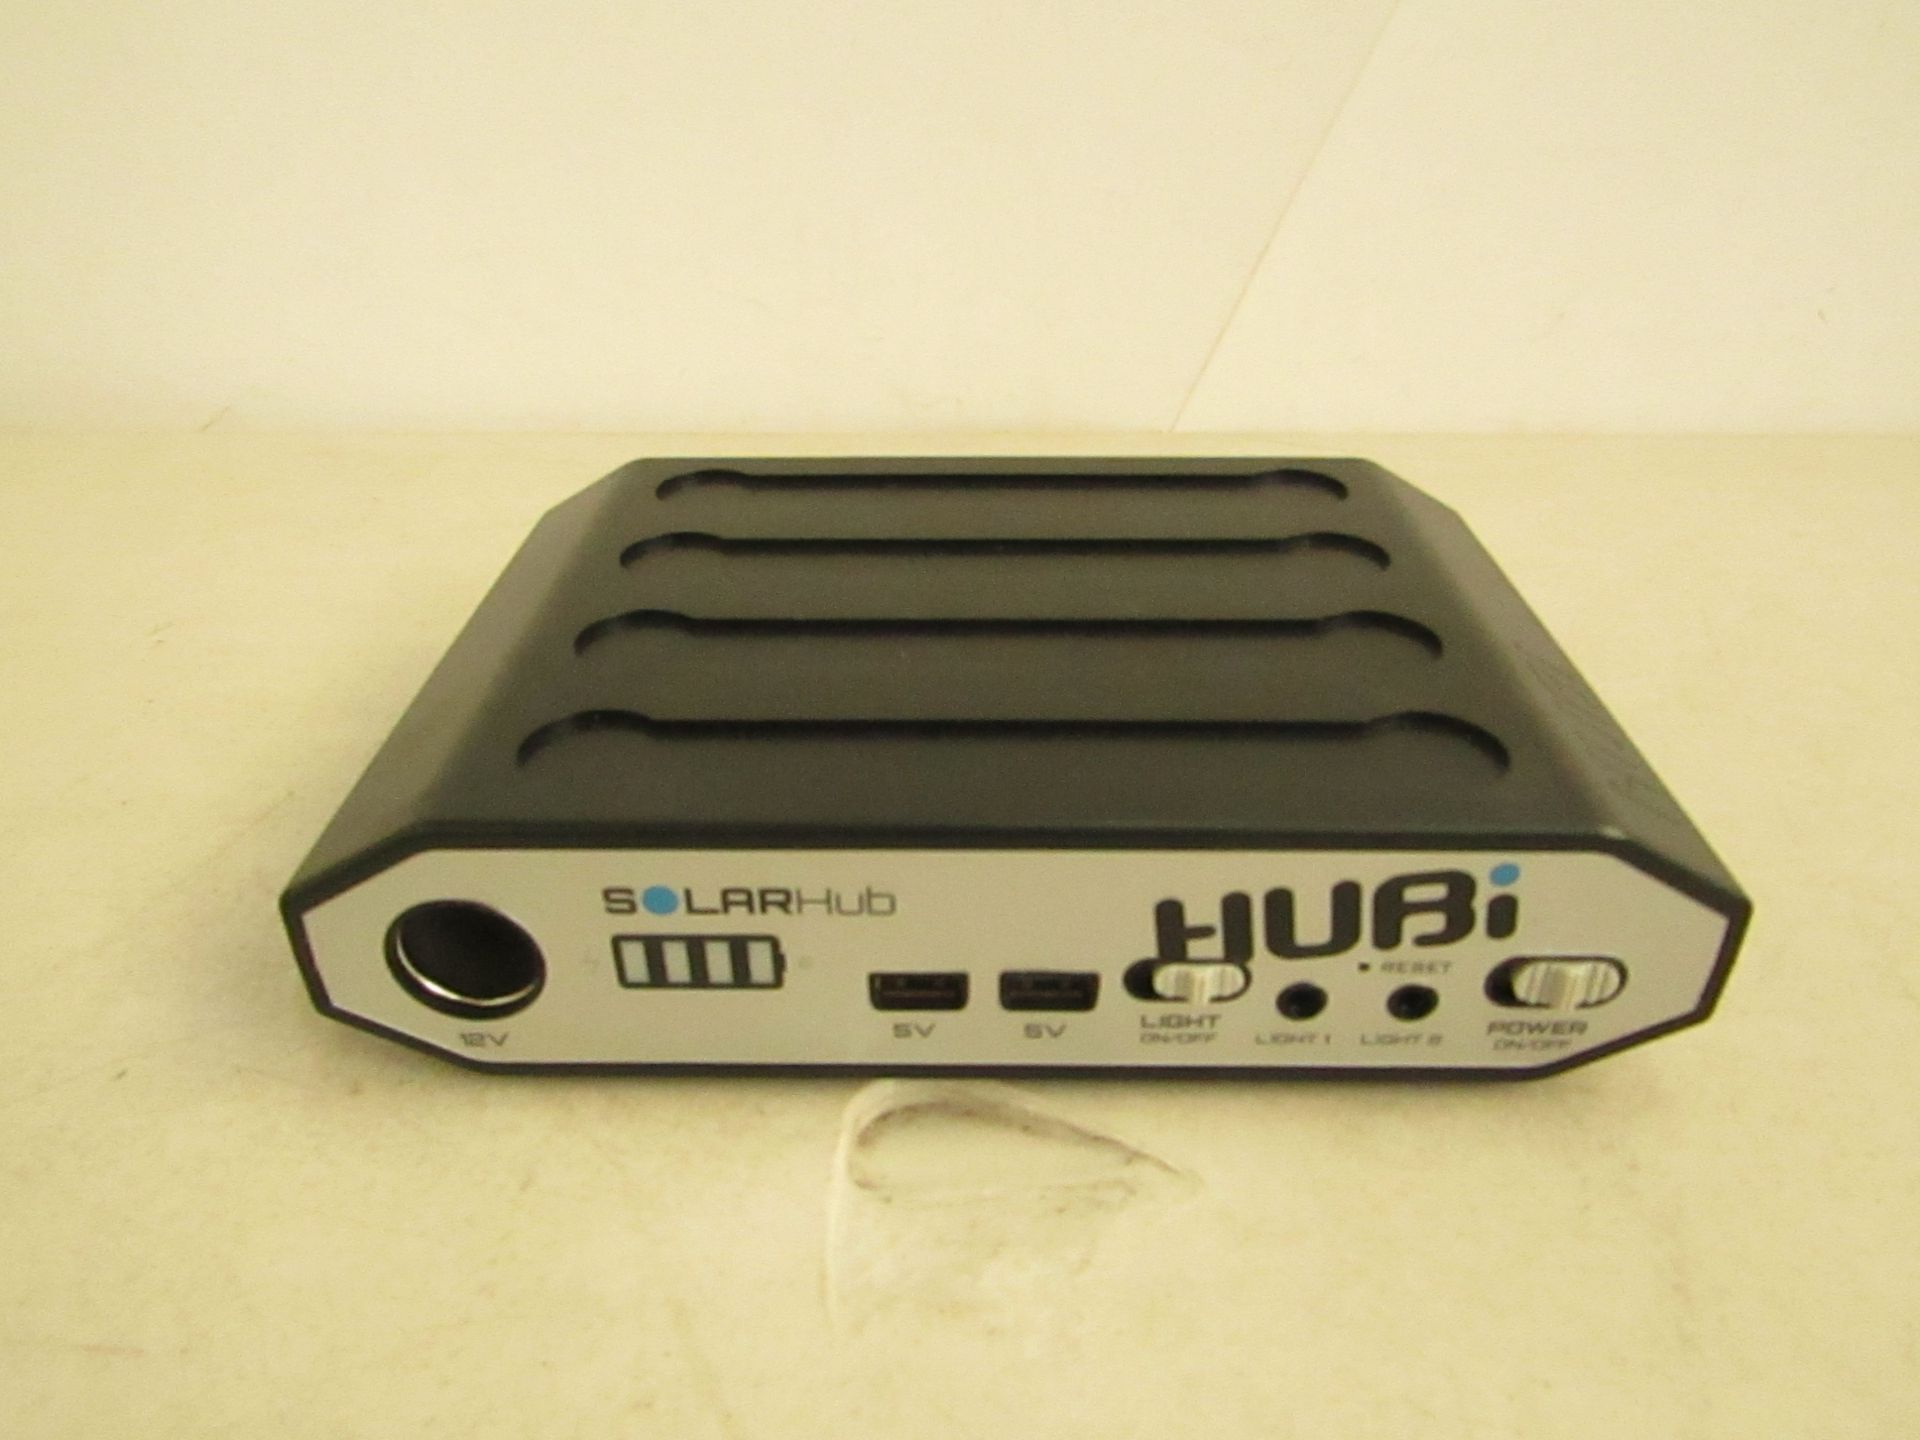 SolarHub Hubi 12v extension hub, untested and boxed